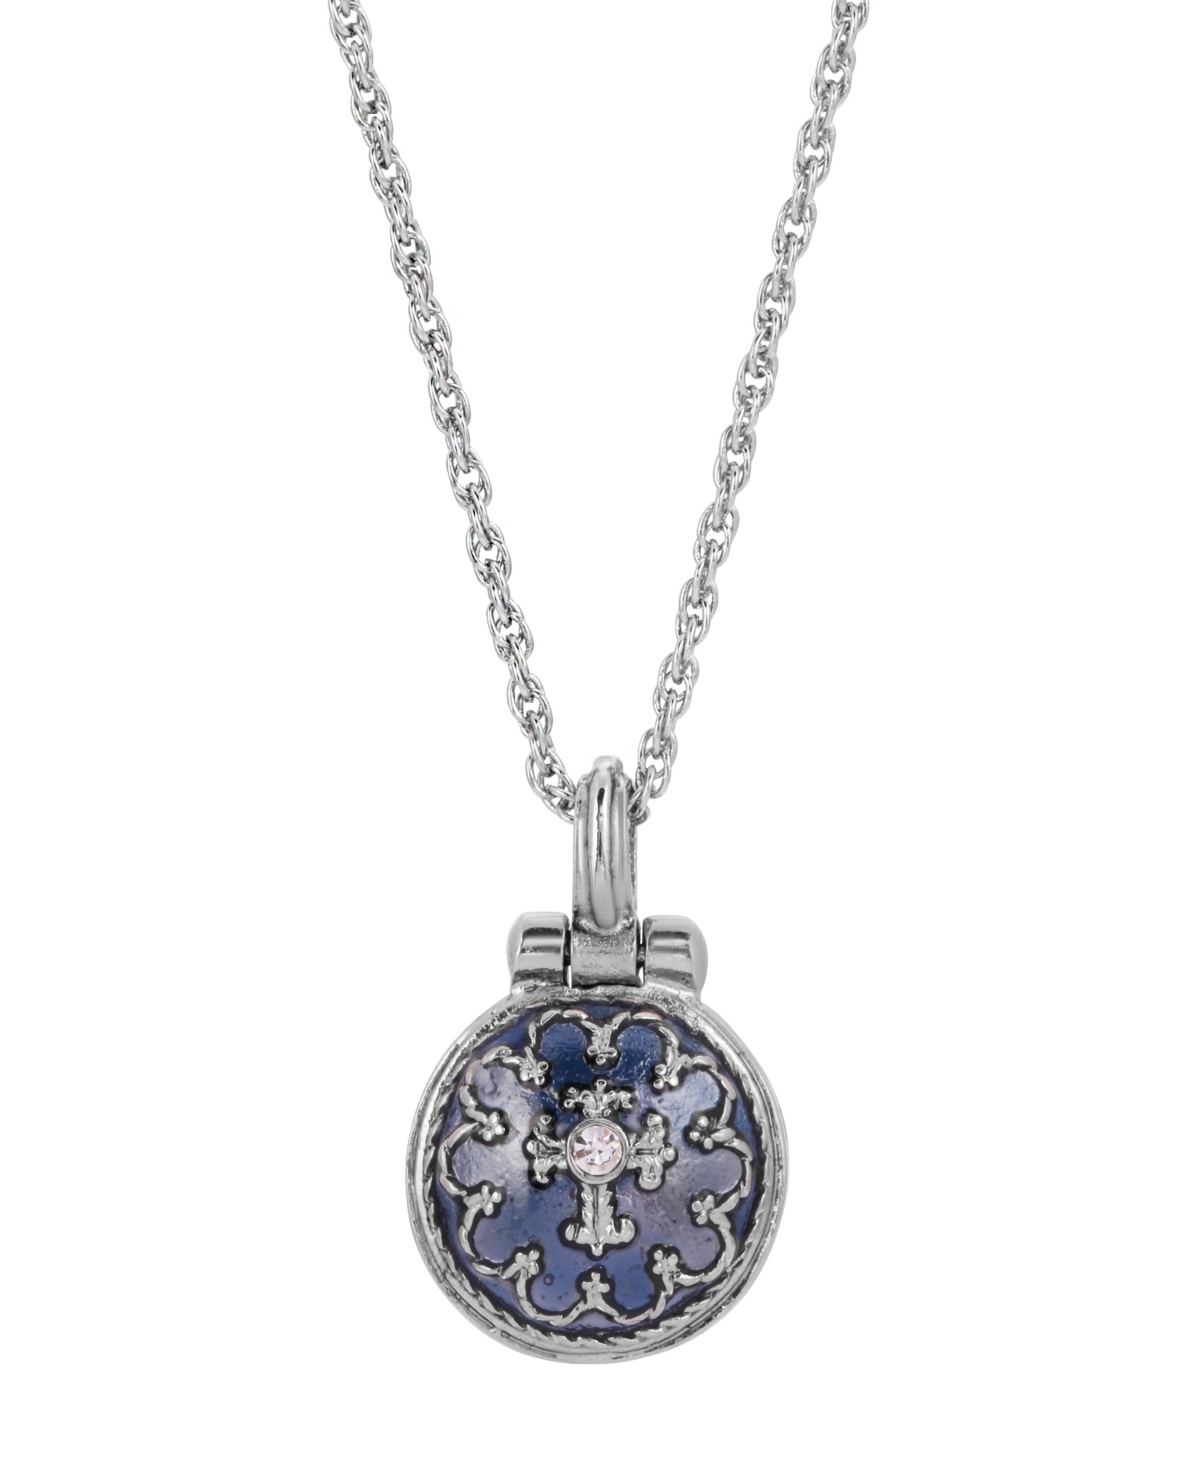 Silver-Tone Blue Enamel Cross Pendant Enclosed Virgin Mary Necklace - Blue